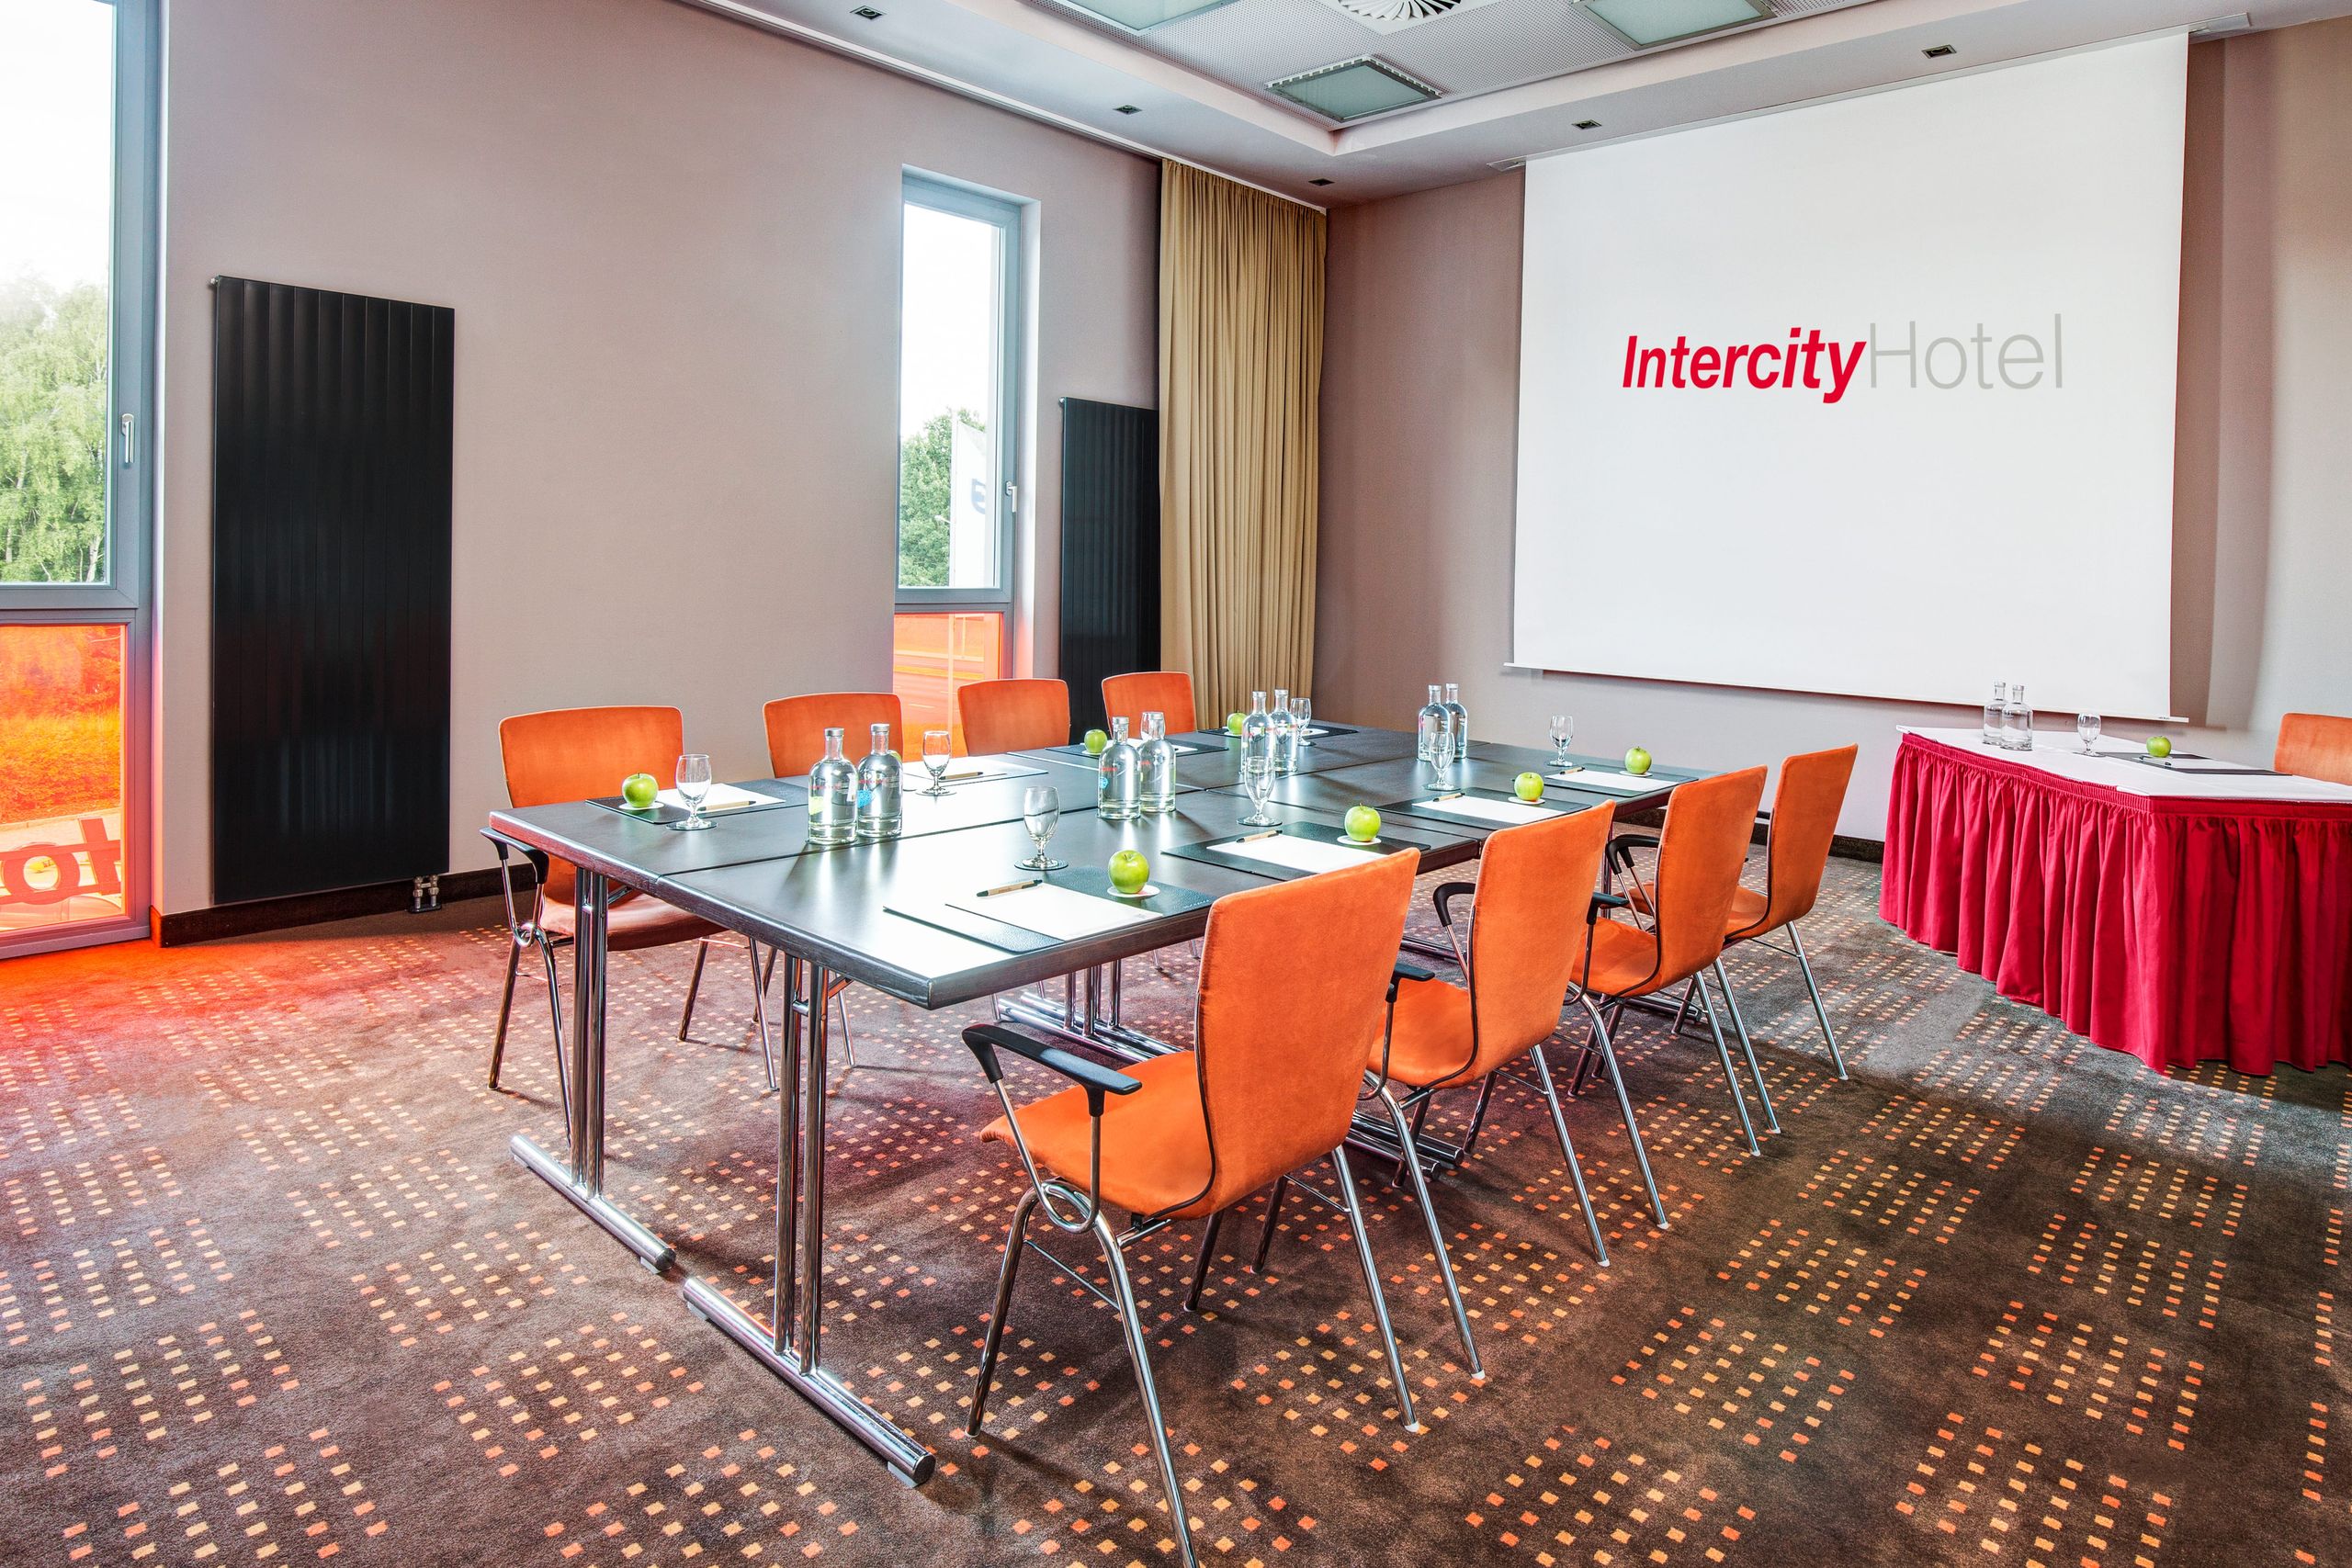 IntercityHotel Berlin-Brandenburg Airport - Meetings & Events - Conference room 